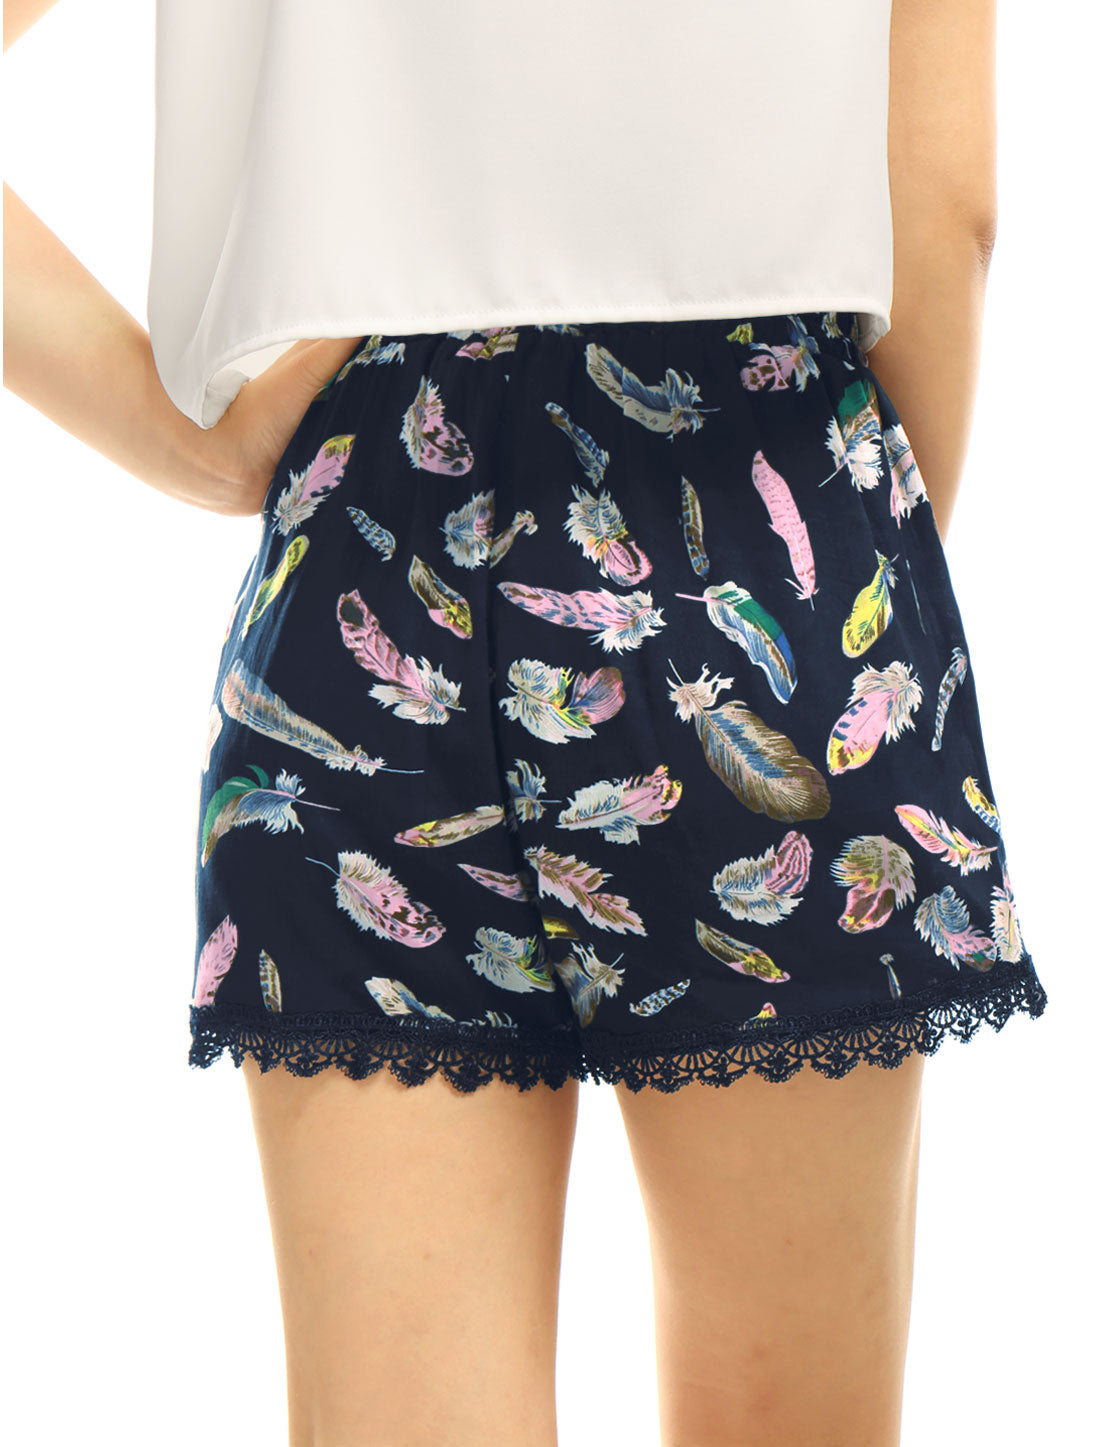 Allegra K Women's Summer Shorts Floral Printed Lace Trim Elastic Waist Beach Shorts